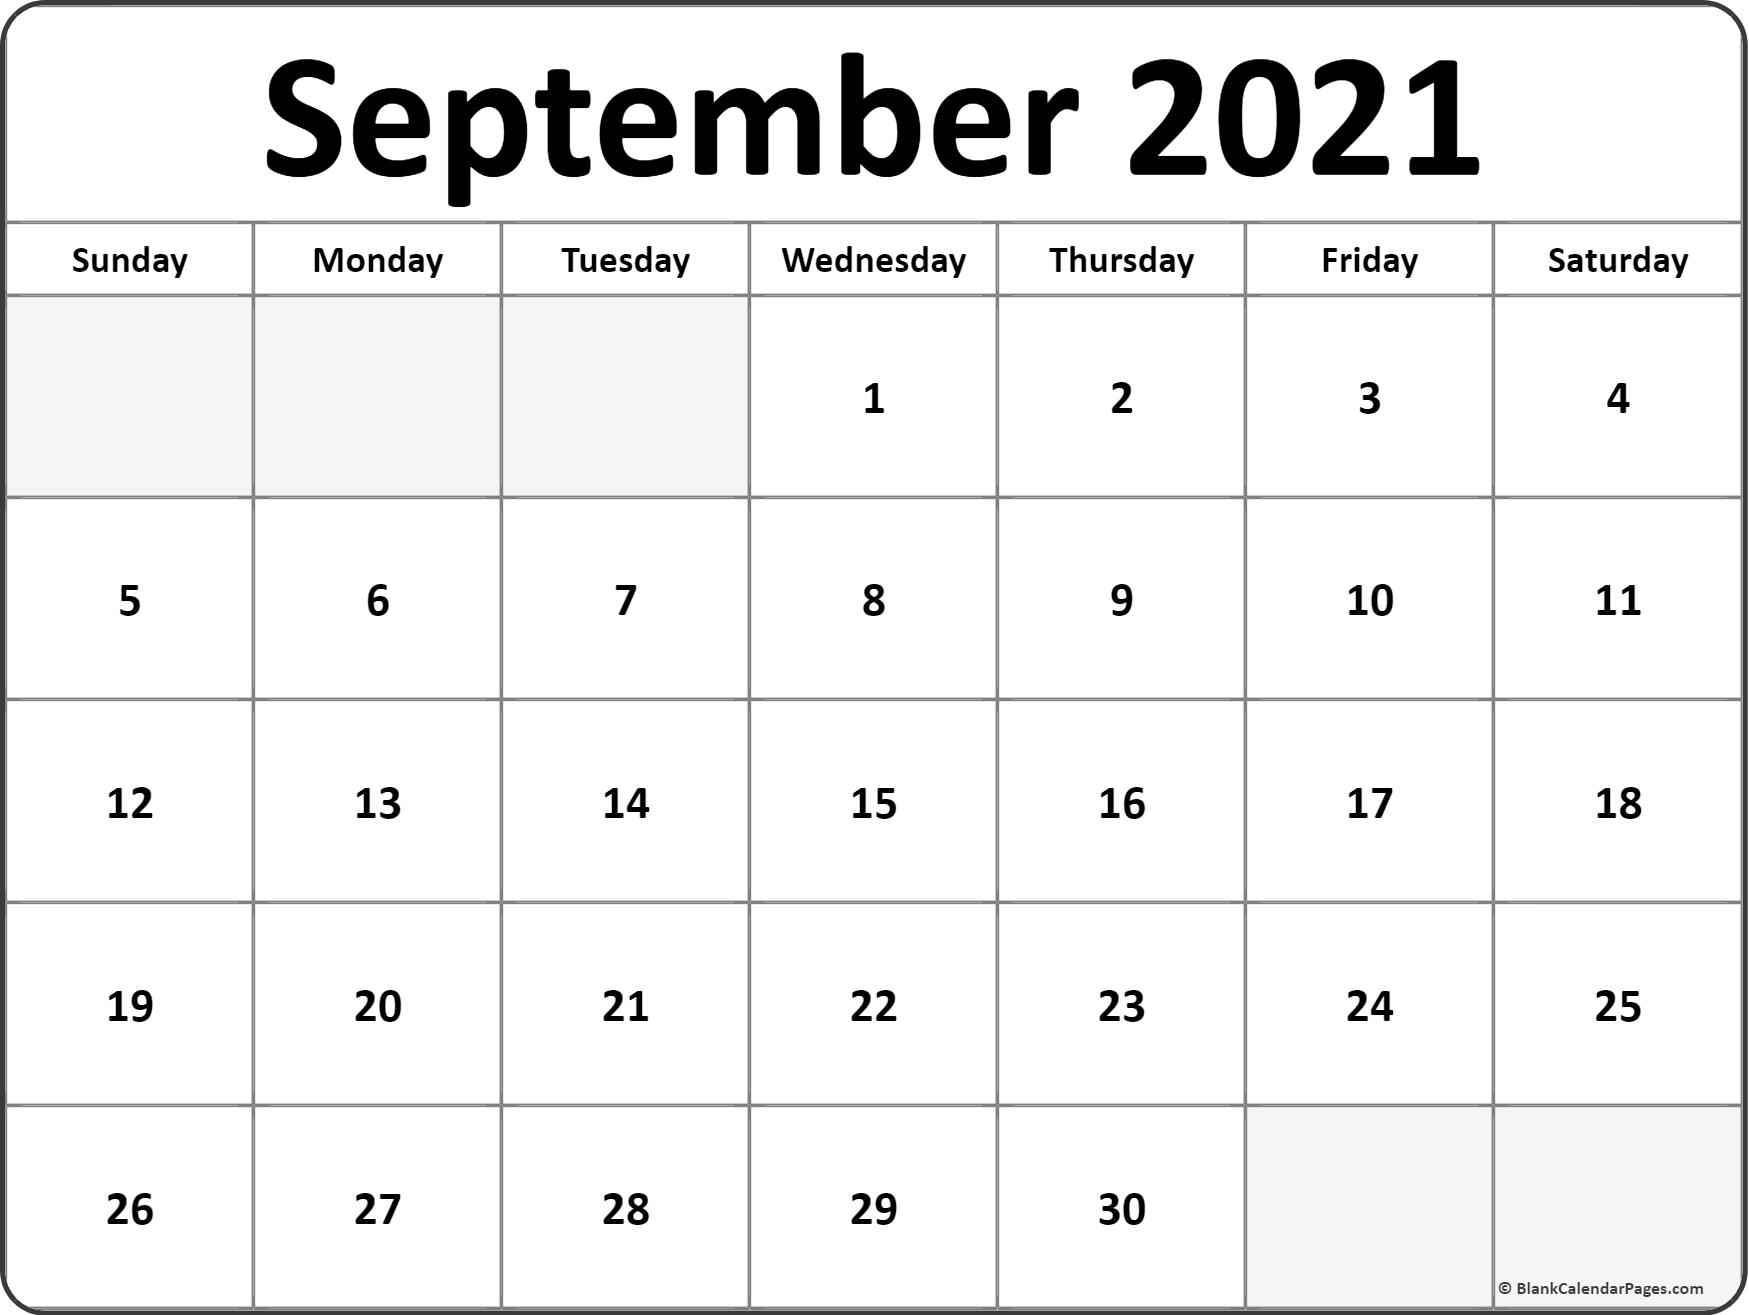 September 2021 Blank Calendar Collection. Sept 2020 To July 2021 Calendar